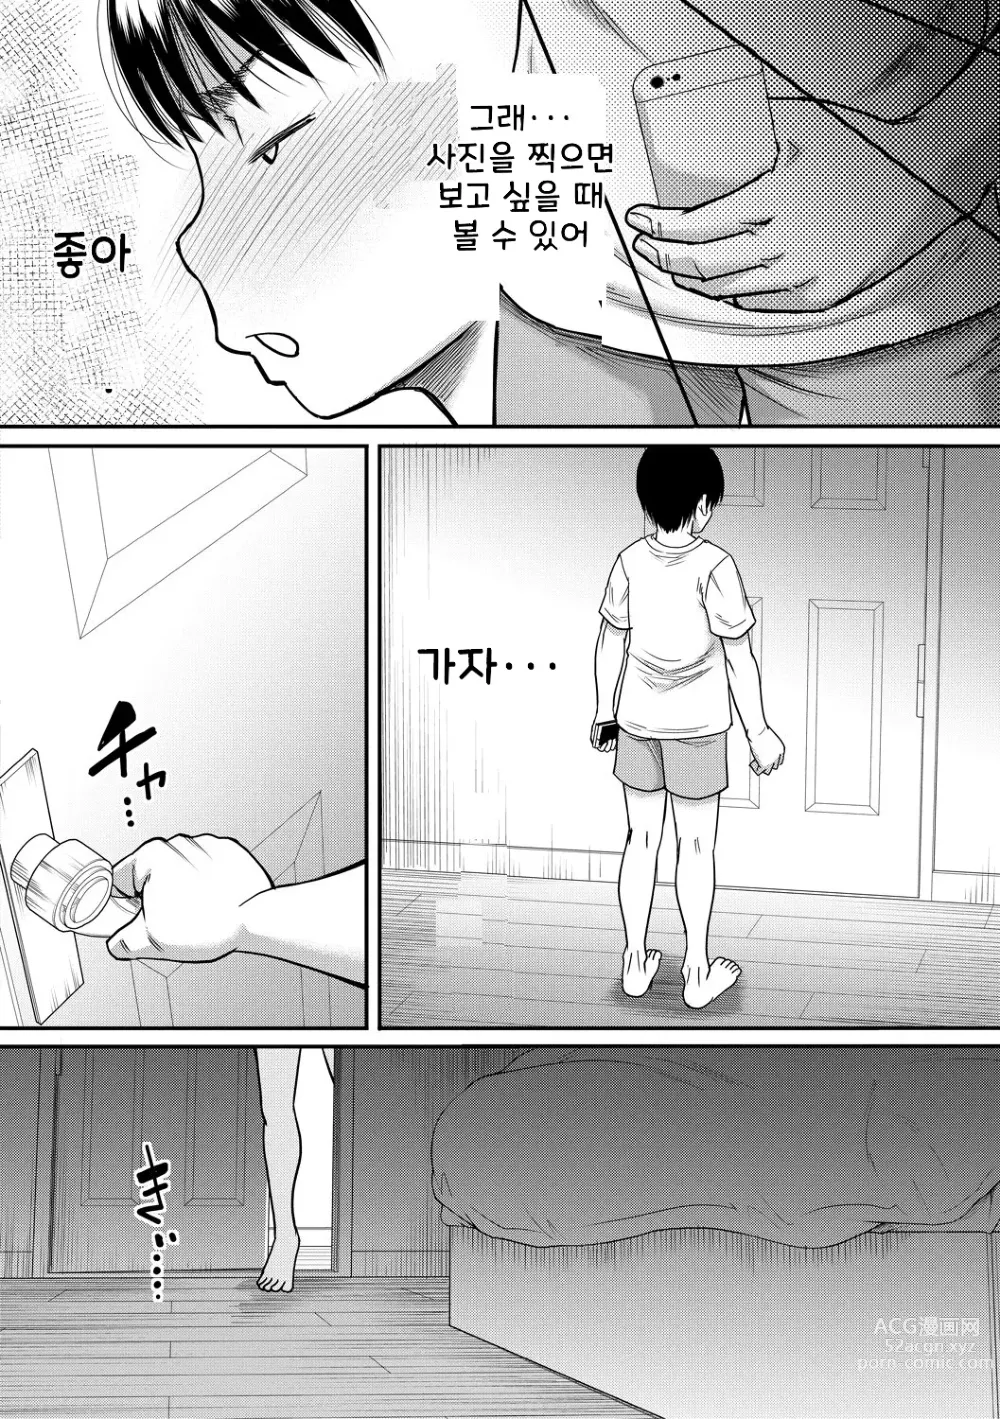 Page 16 of manga Boku to Okaa-san no Himitsu no Kankei l 나와 의붓 엄마의 비밀 관계